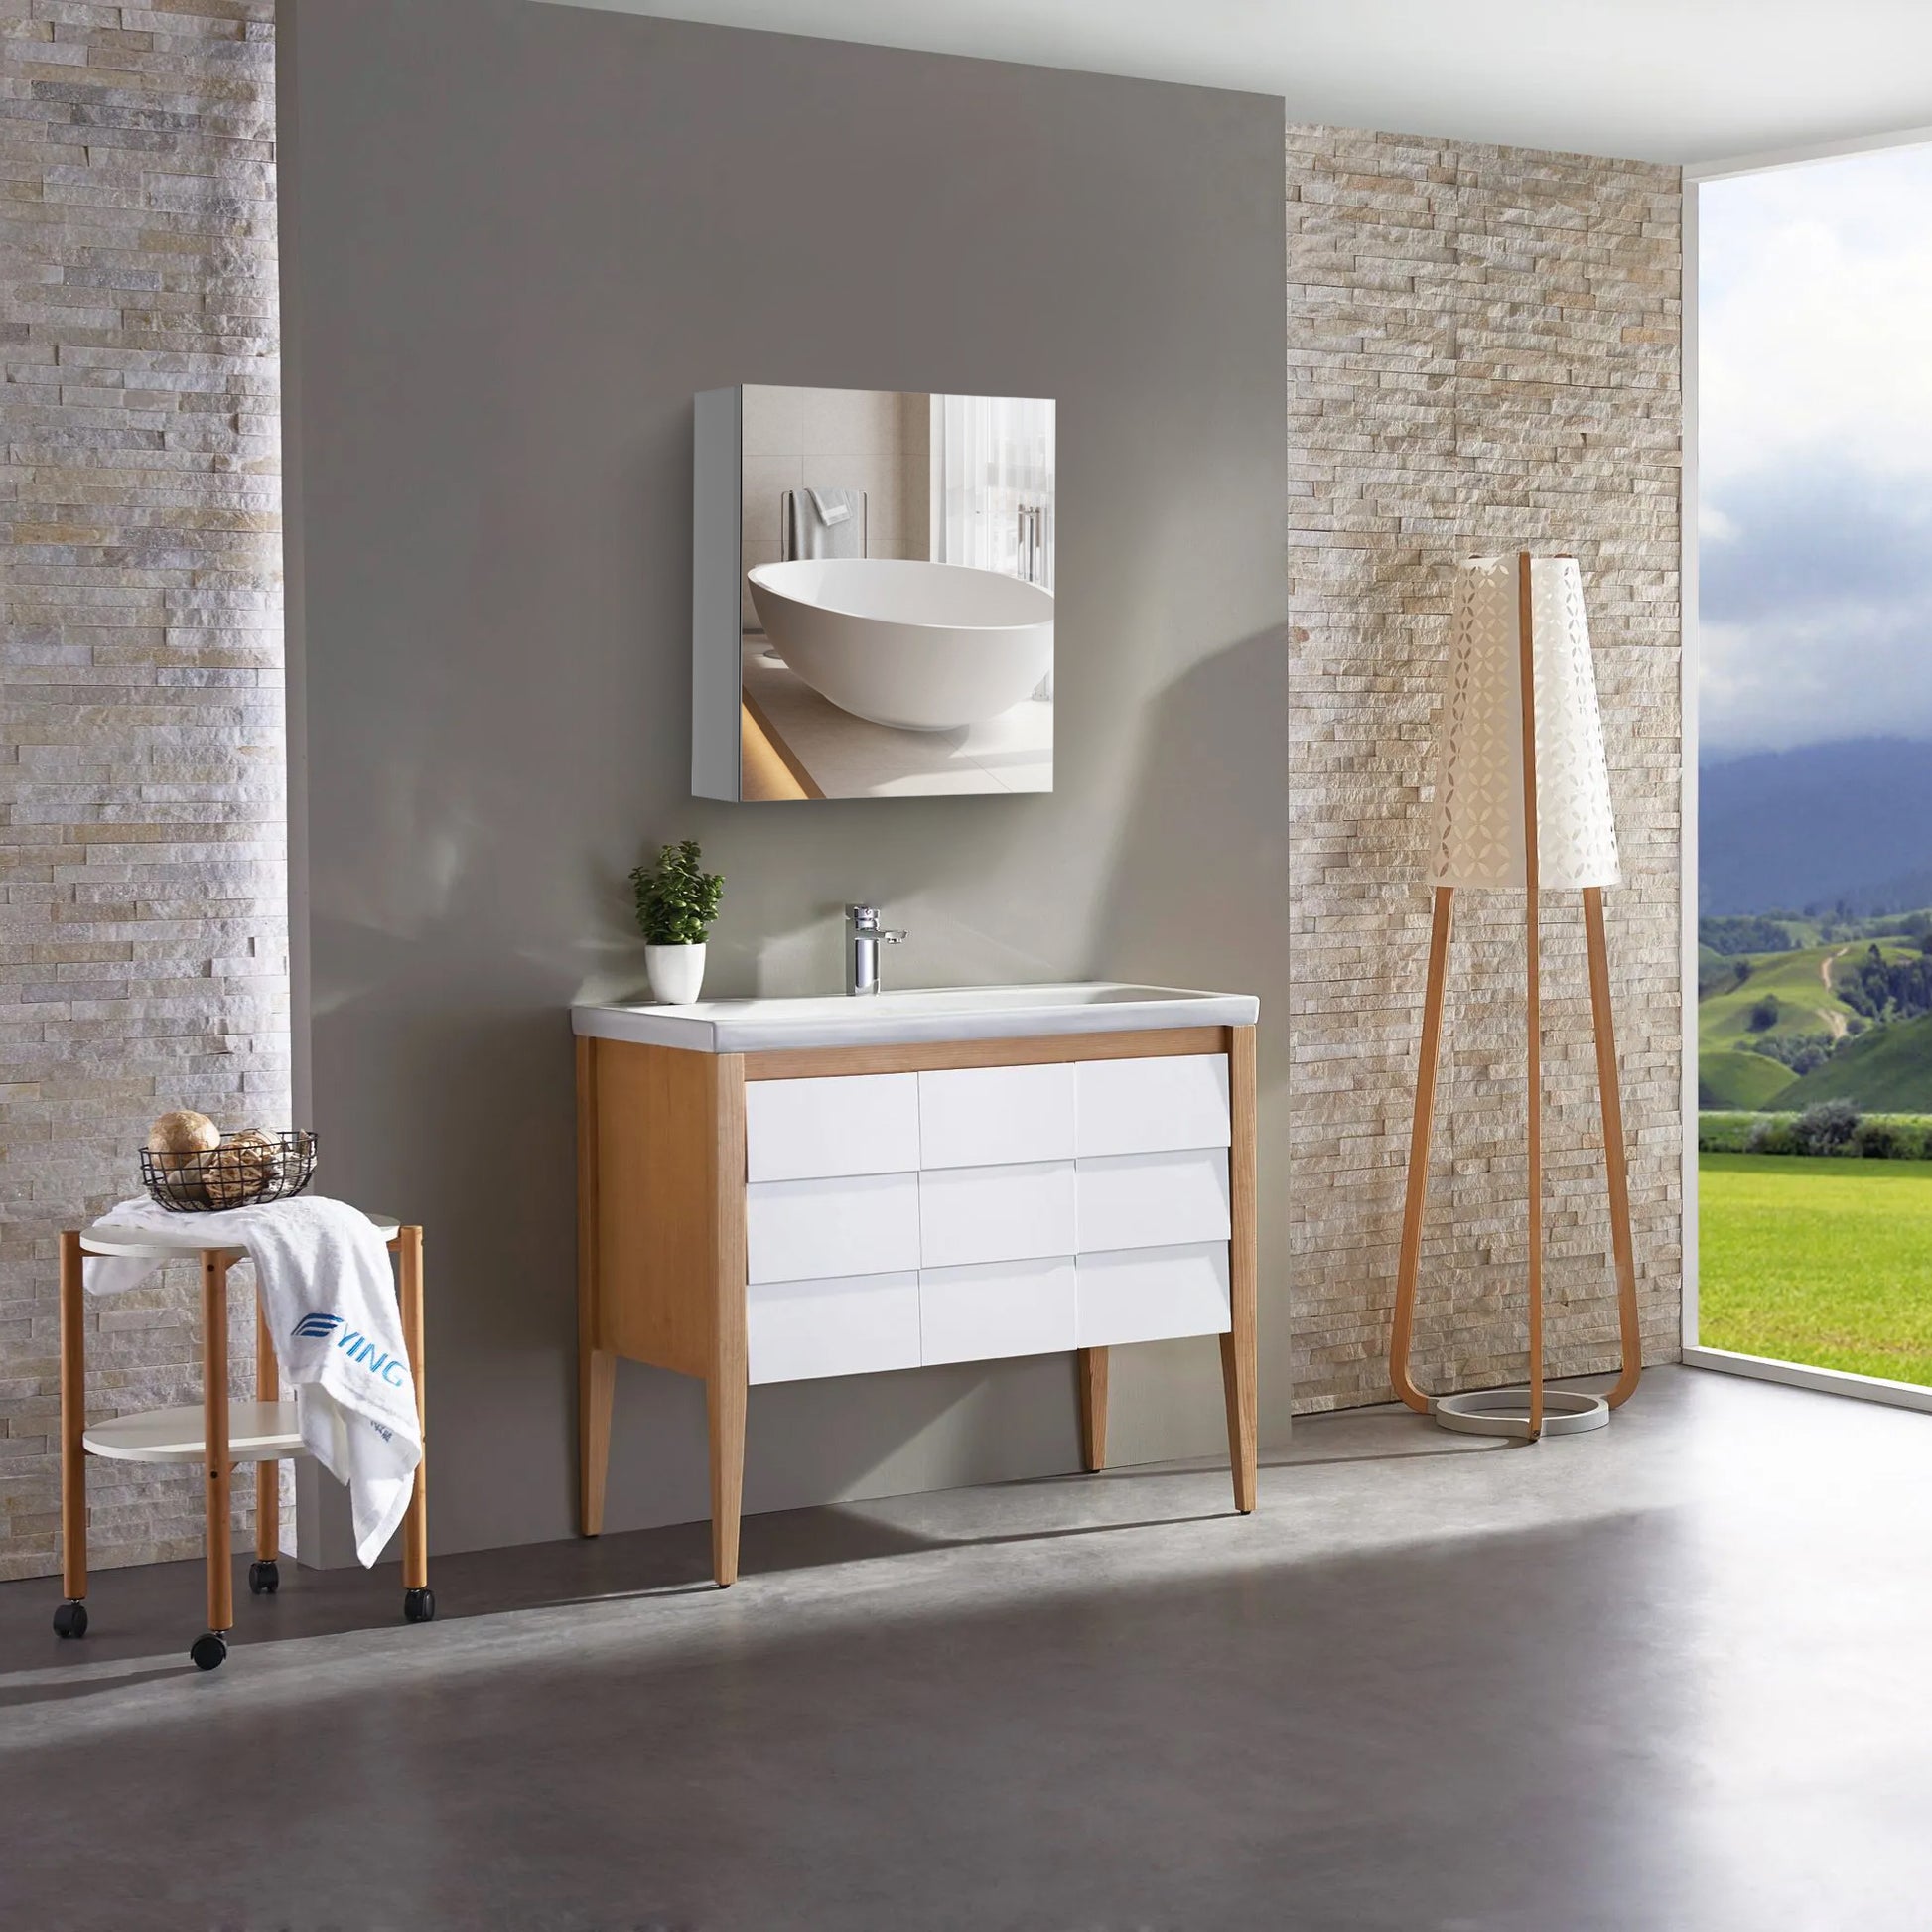 24" W x 26" H Single Door Bathroom Medicine Cabinet white-engineered wood